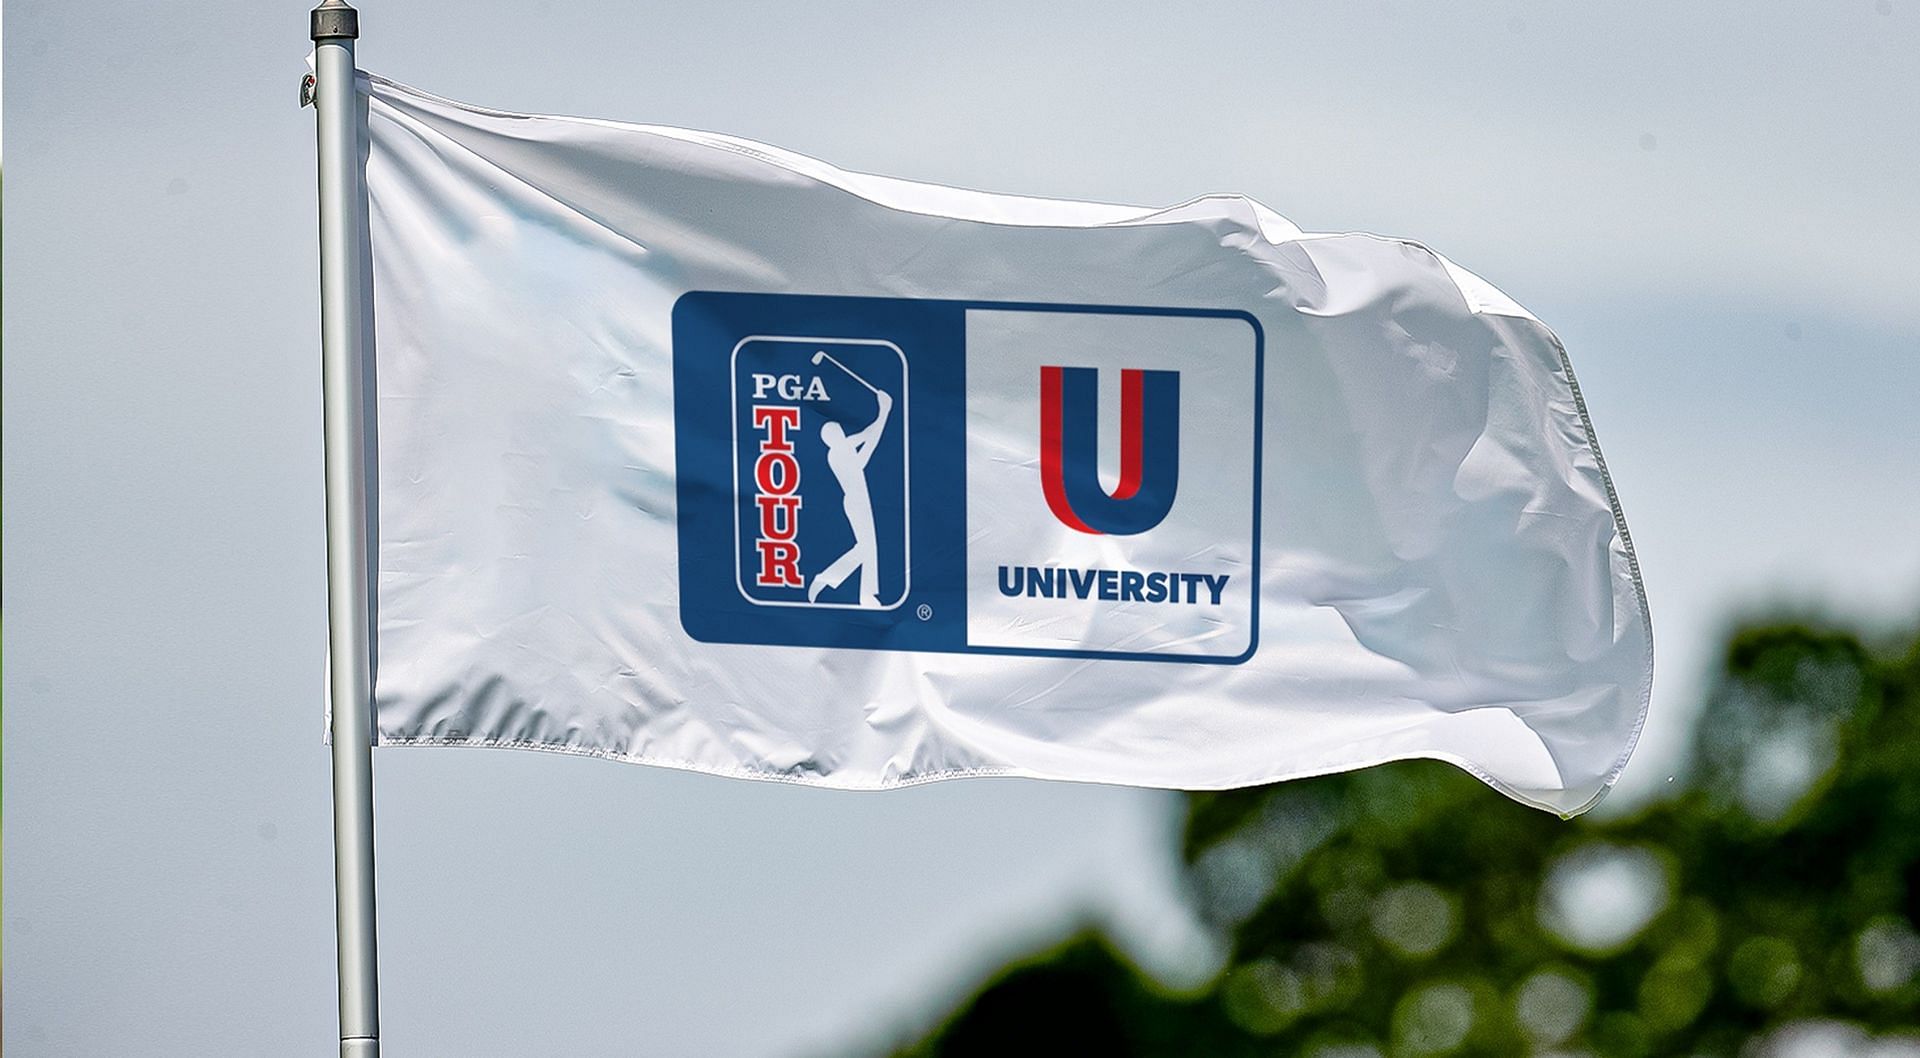 PGA announces enhanced benefits for PGA Tour University; All you need